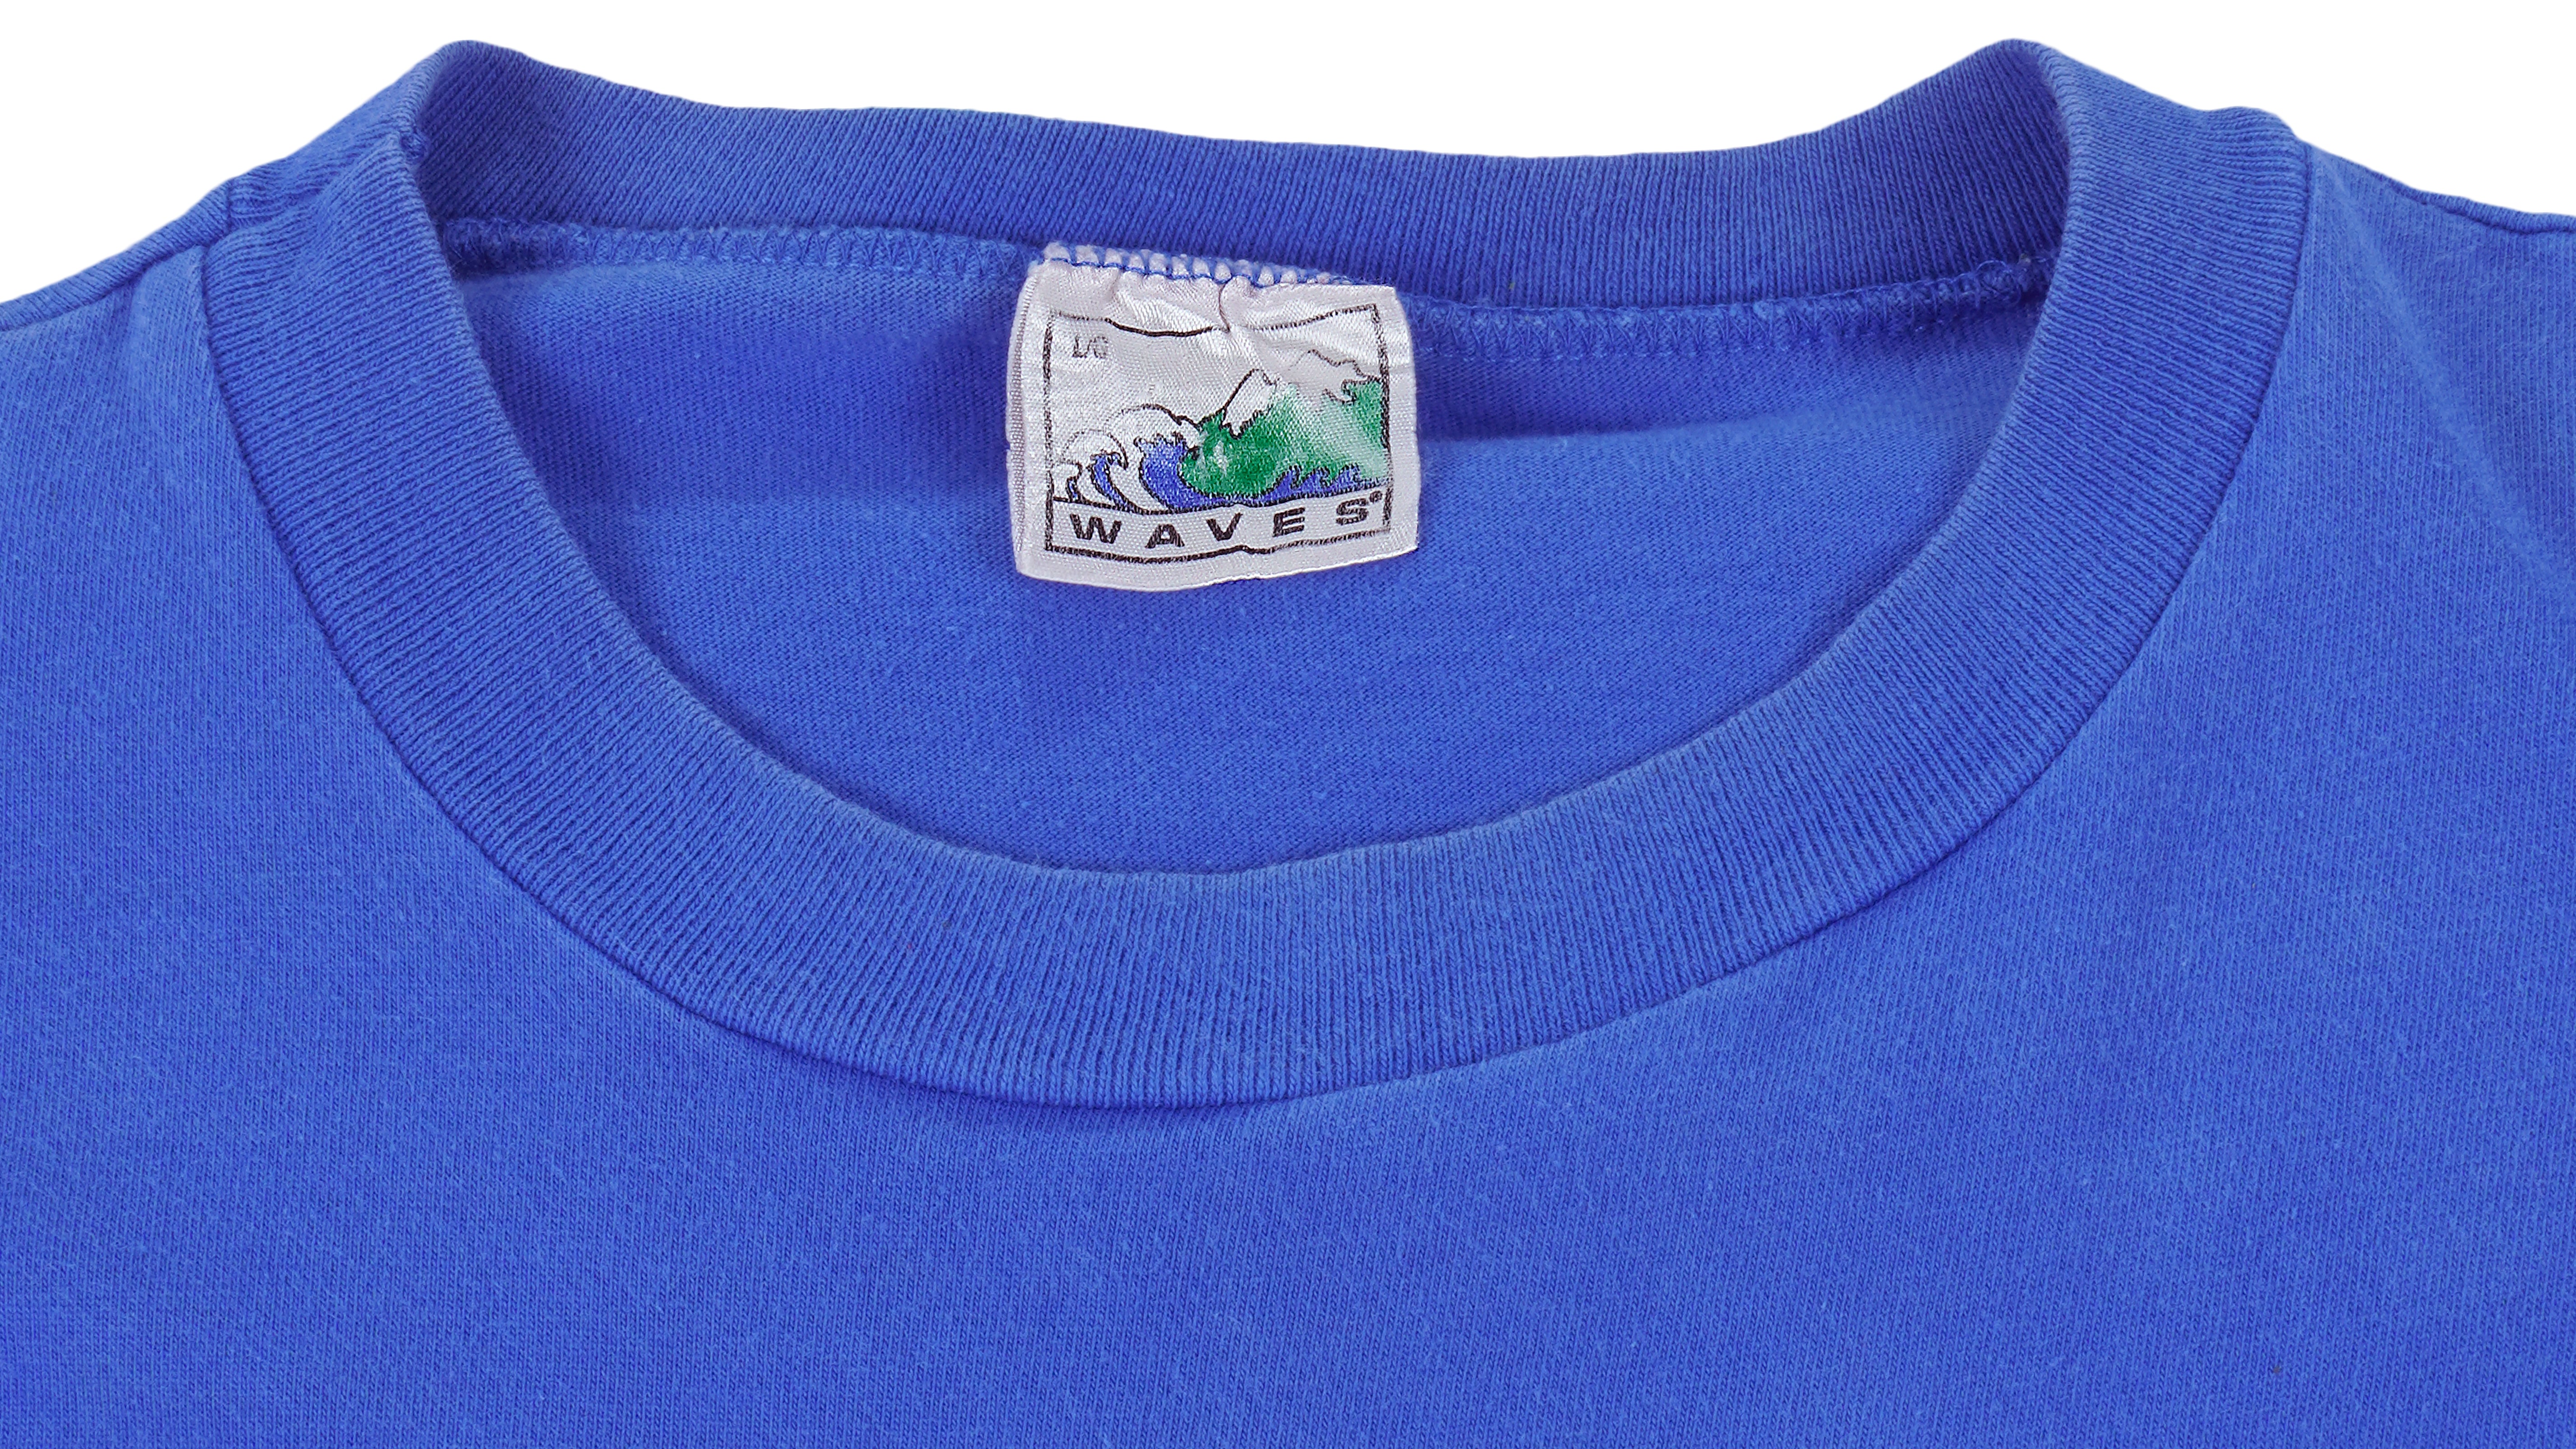 Waves Vintage T Shirt Toronto Blue Jays – Santiagosports